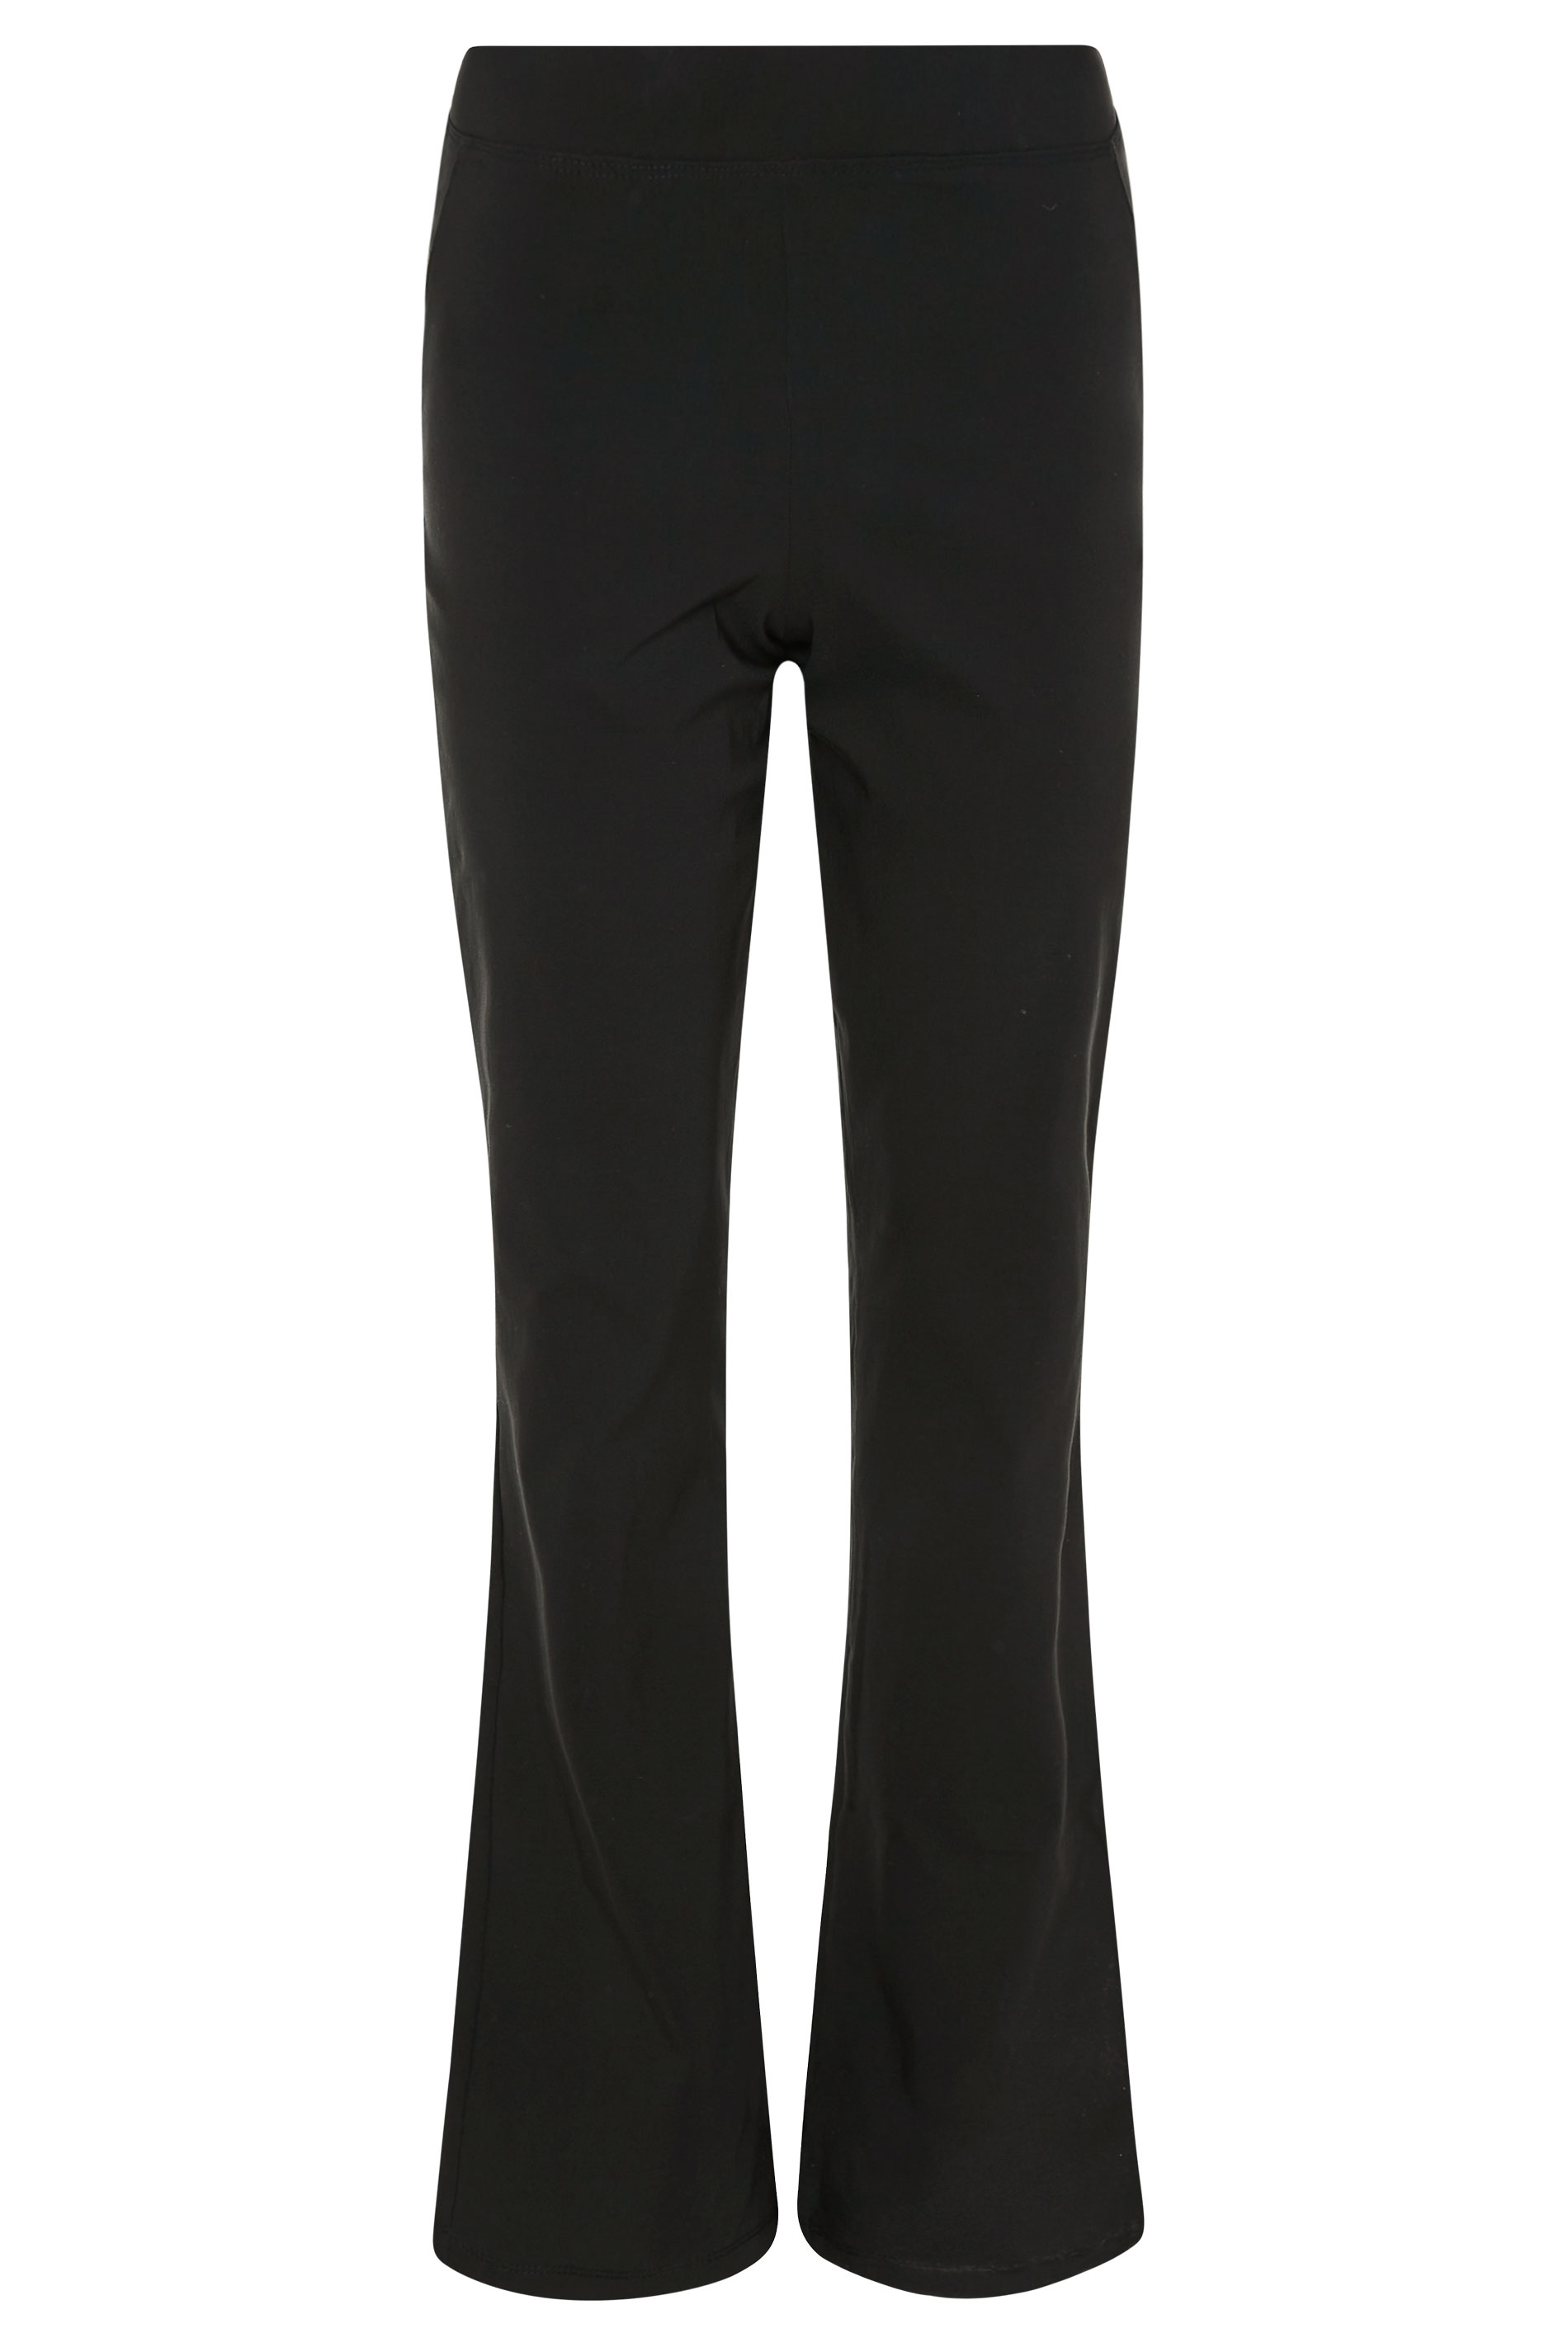 Tall Women's LTS Black Stretch Bootcut Trousers | Long Tall Sally